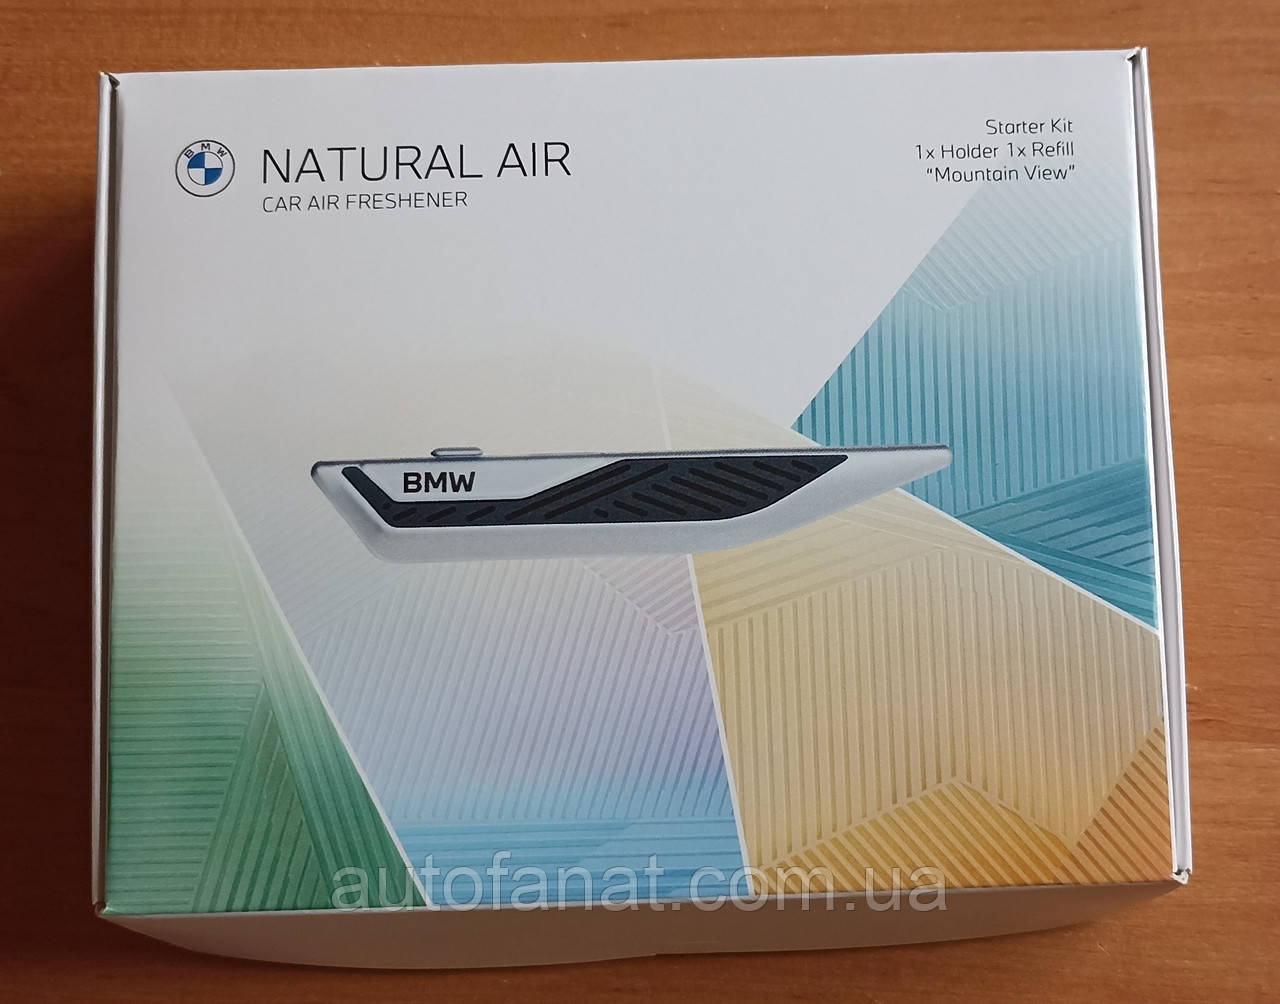 Genuine BMW Natural Air Car Freshener Starter Kit 83125A7DC77 New